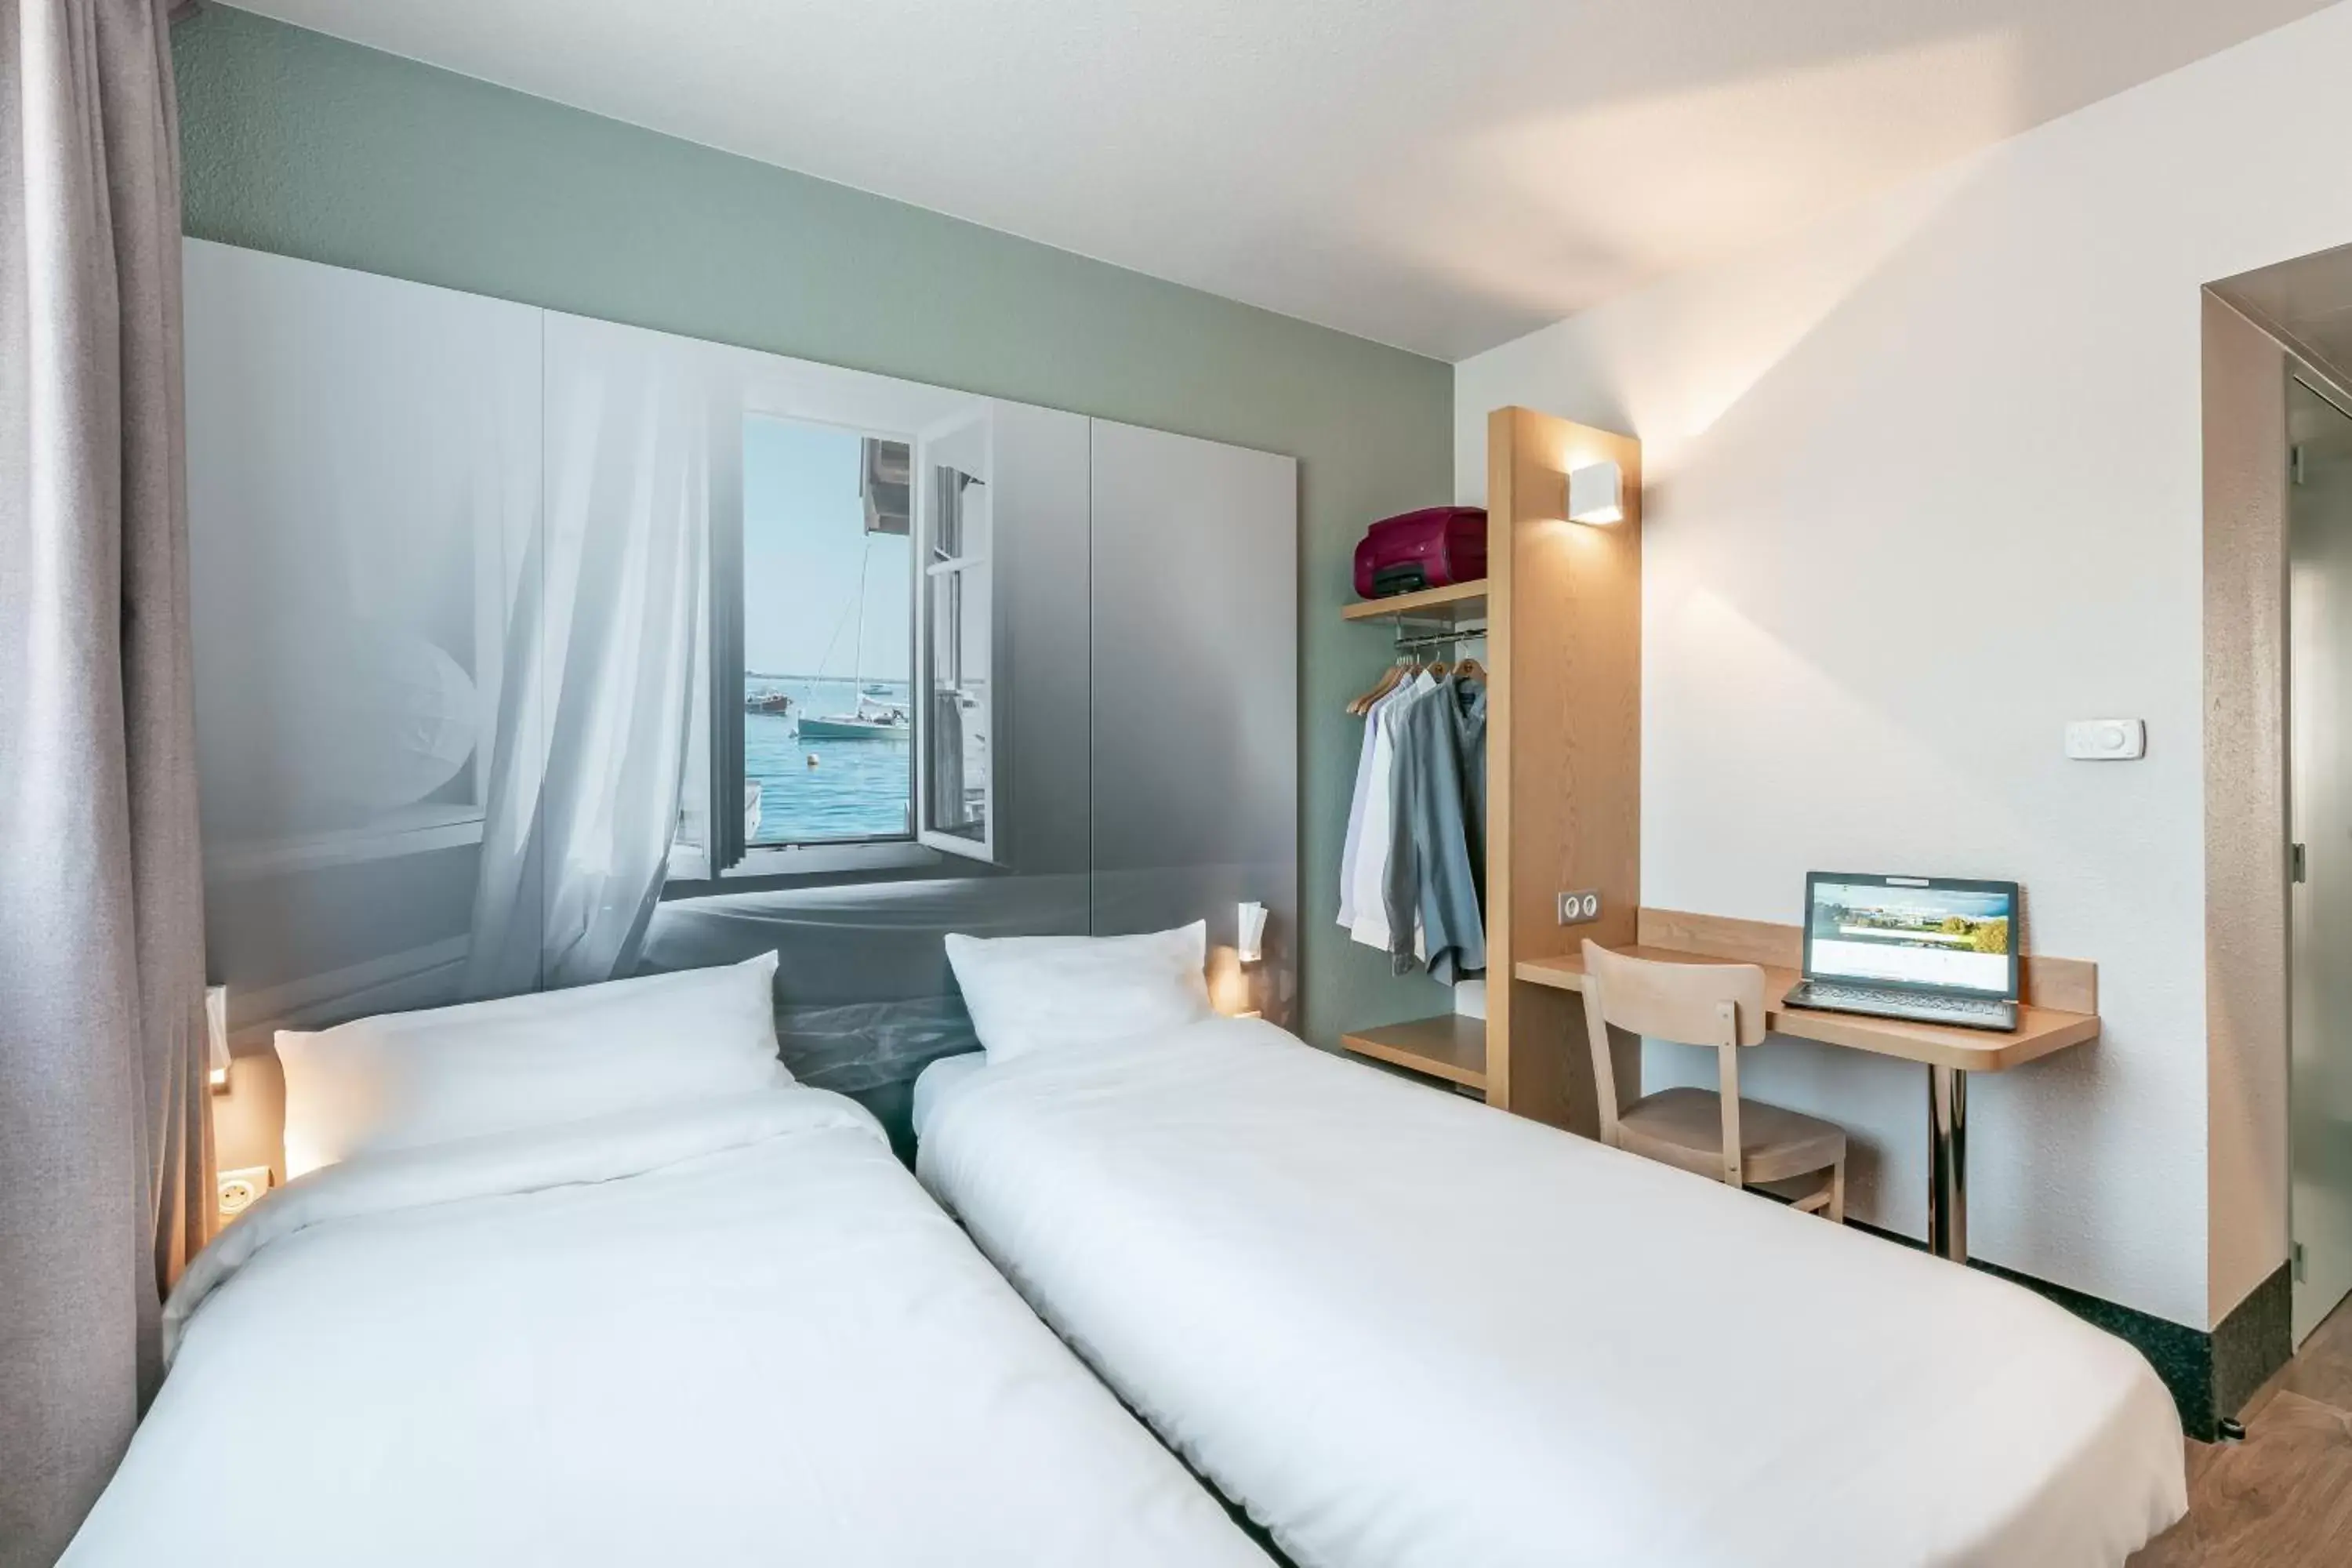 Bedroom, Room Photo in B&B HOTEL Bordeaux Mios